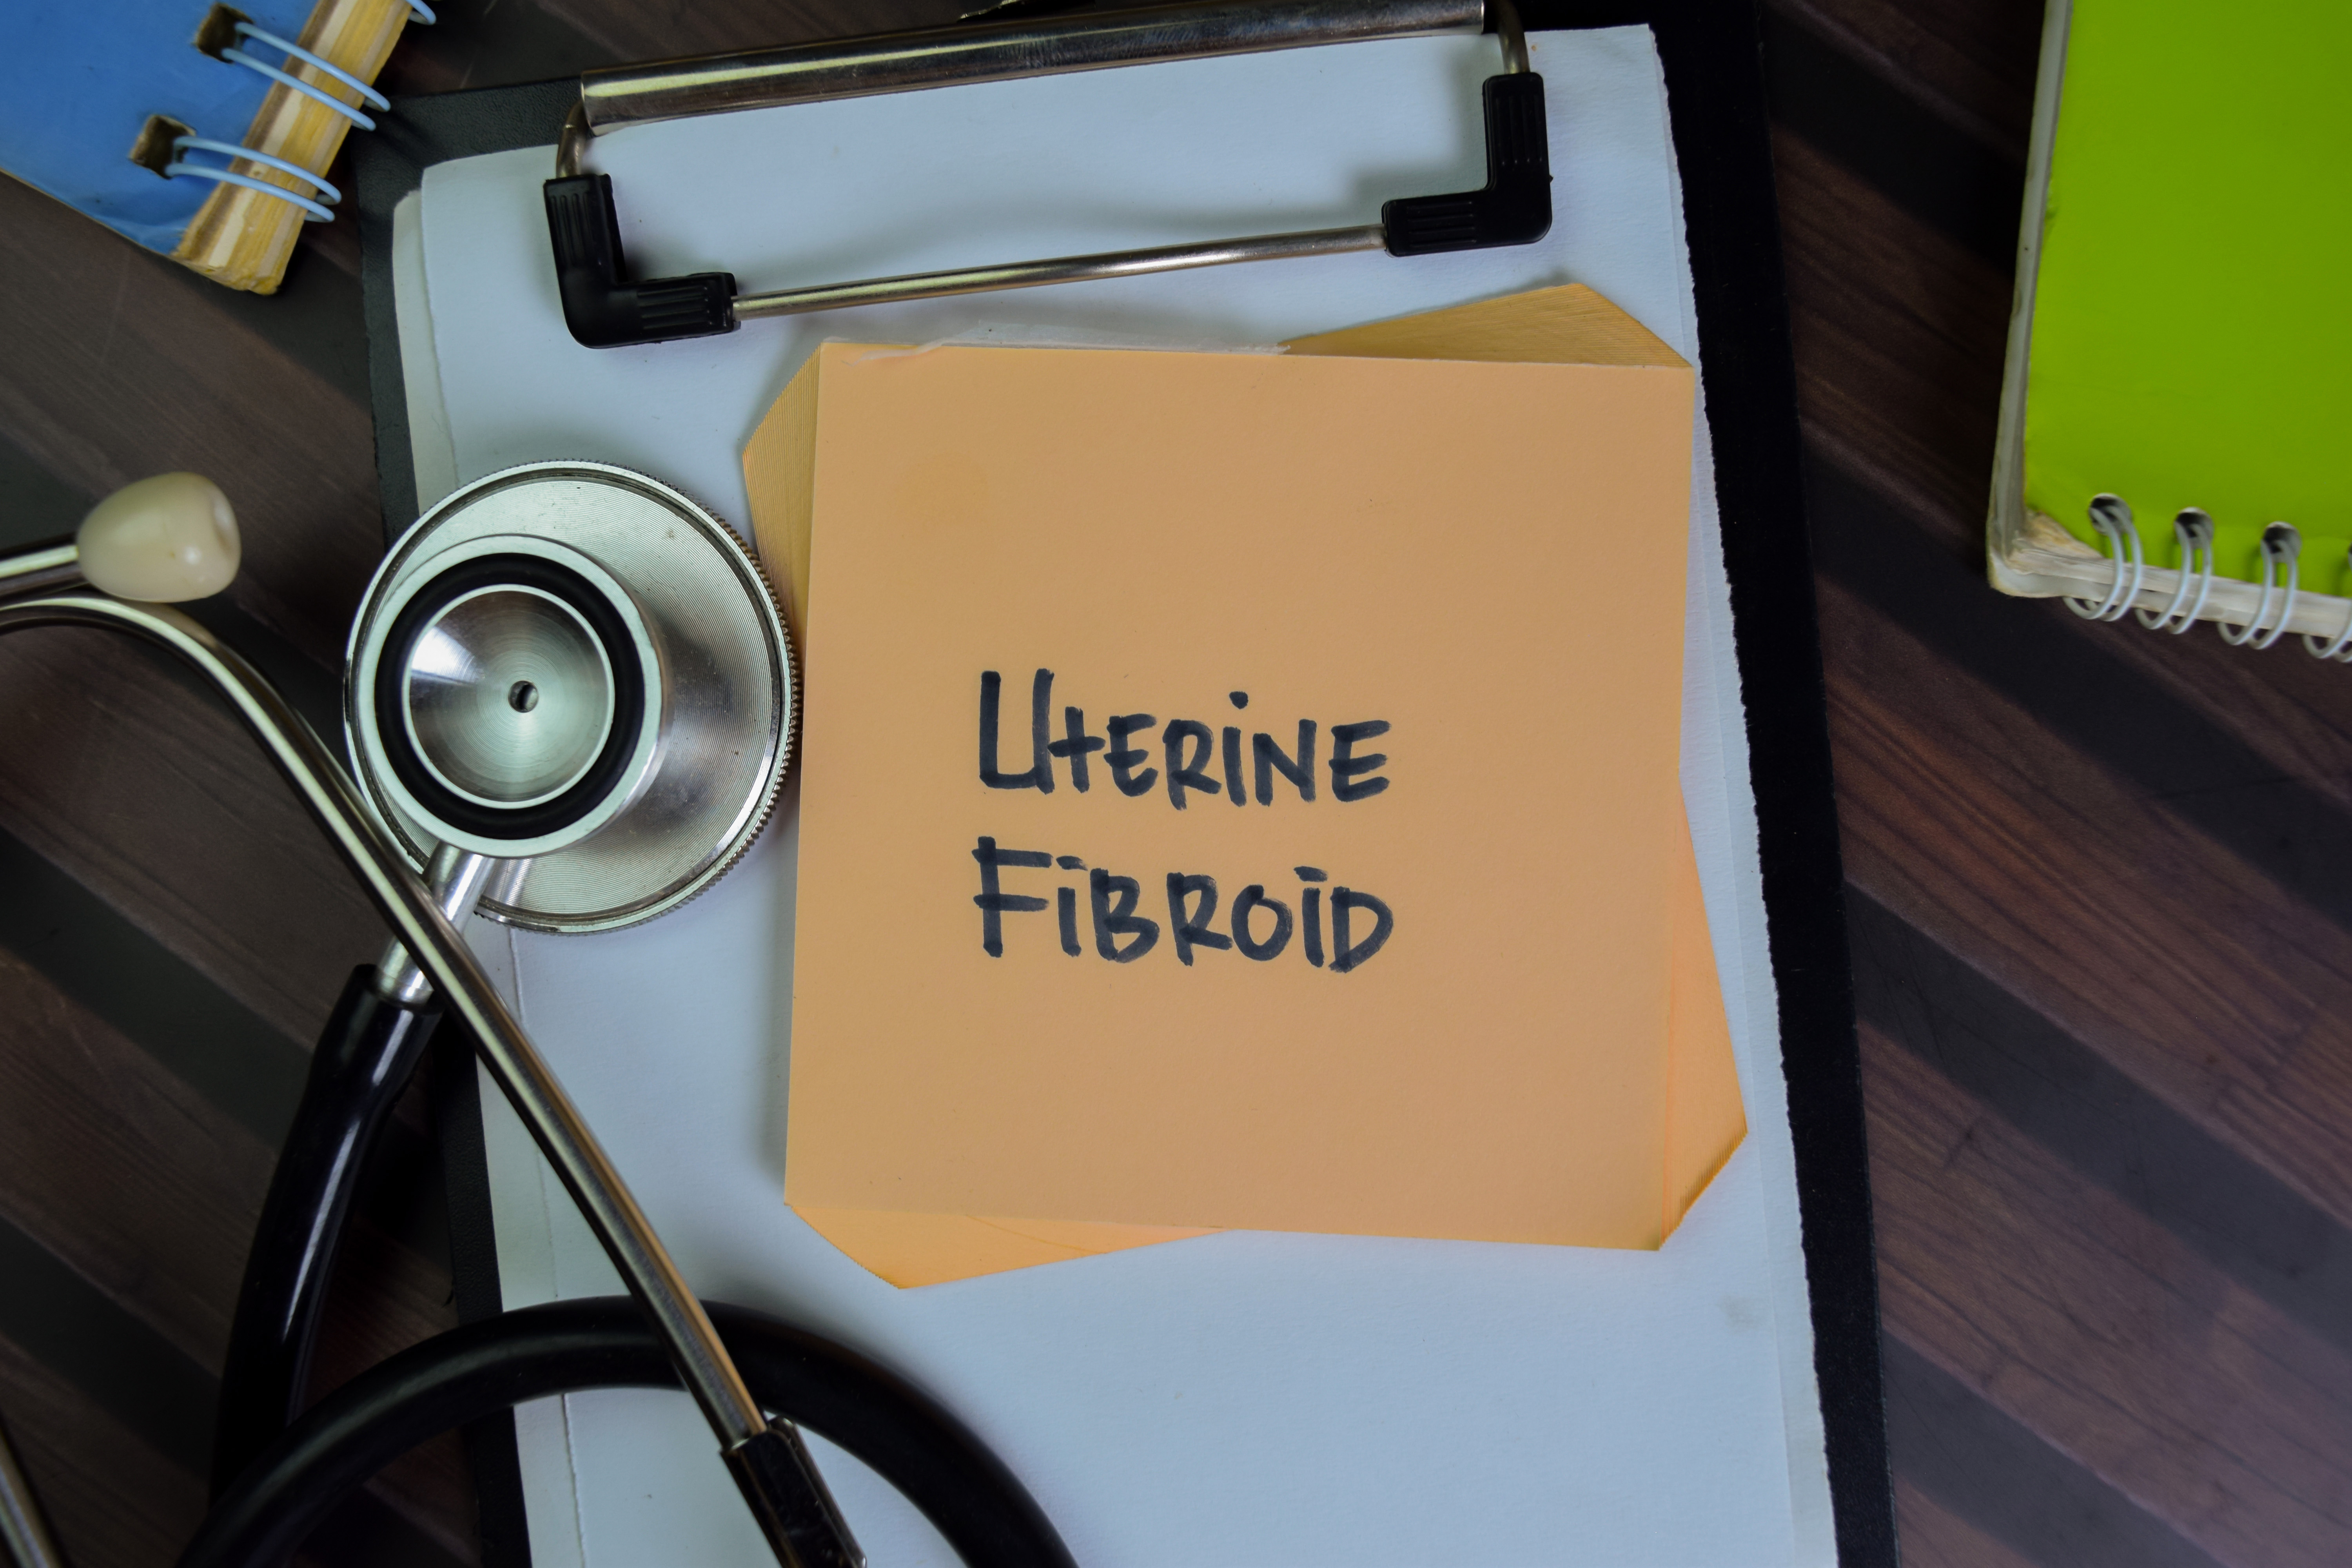 Uterine Fibroid Relief